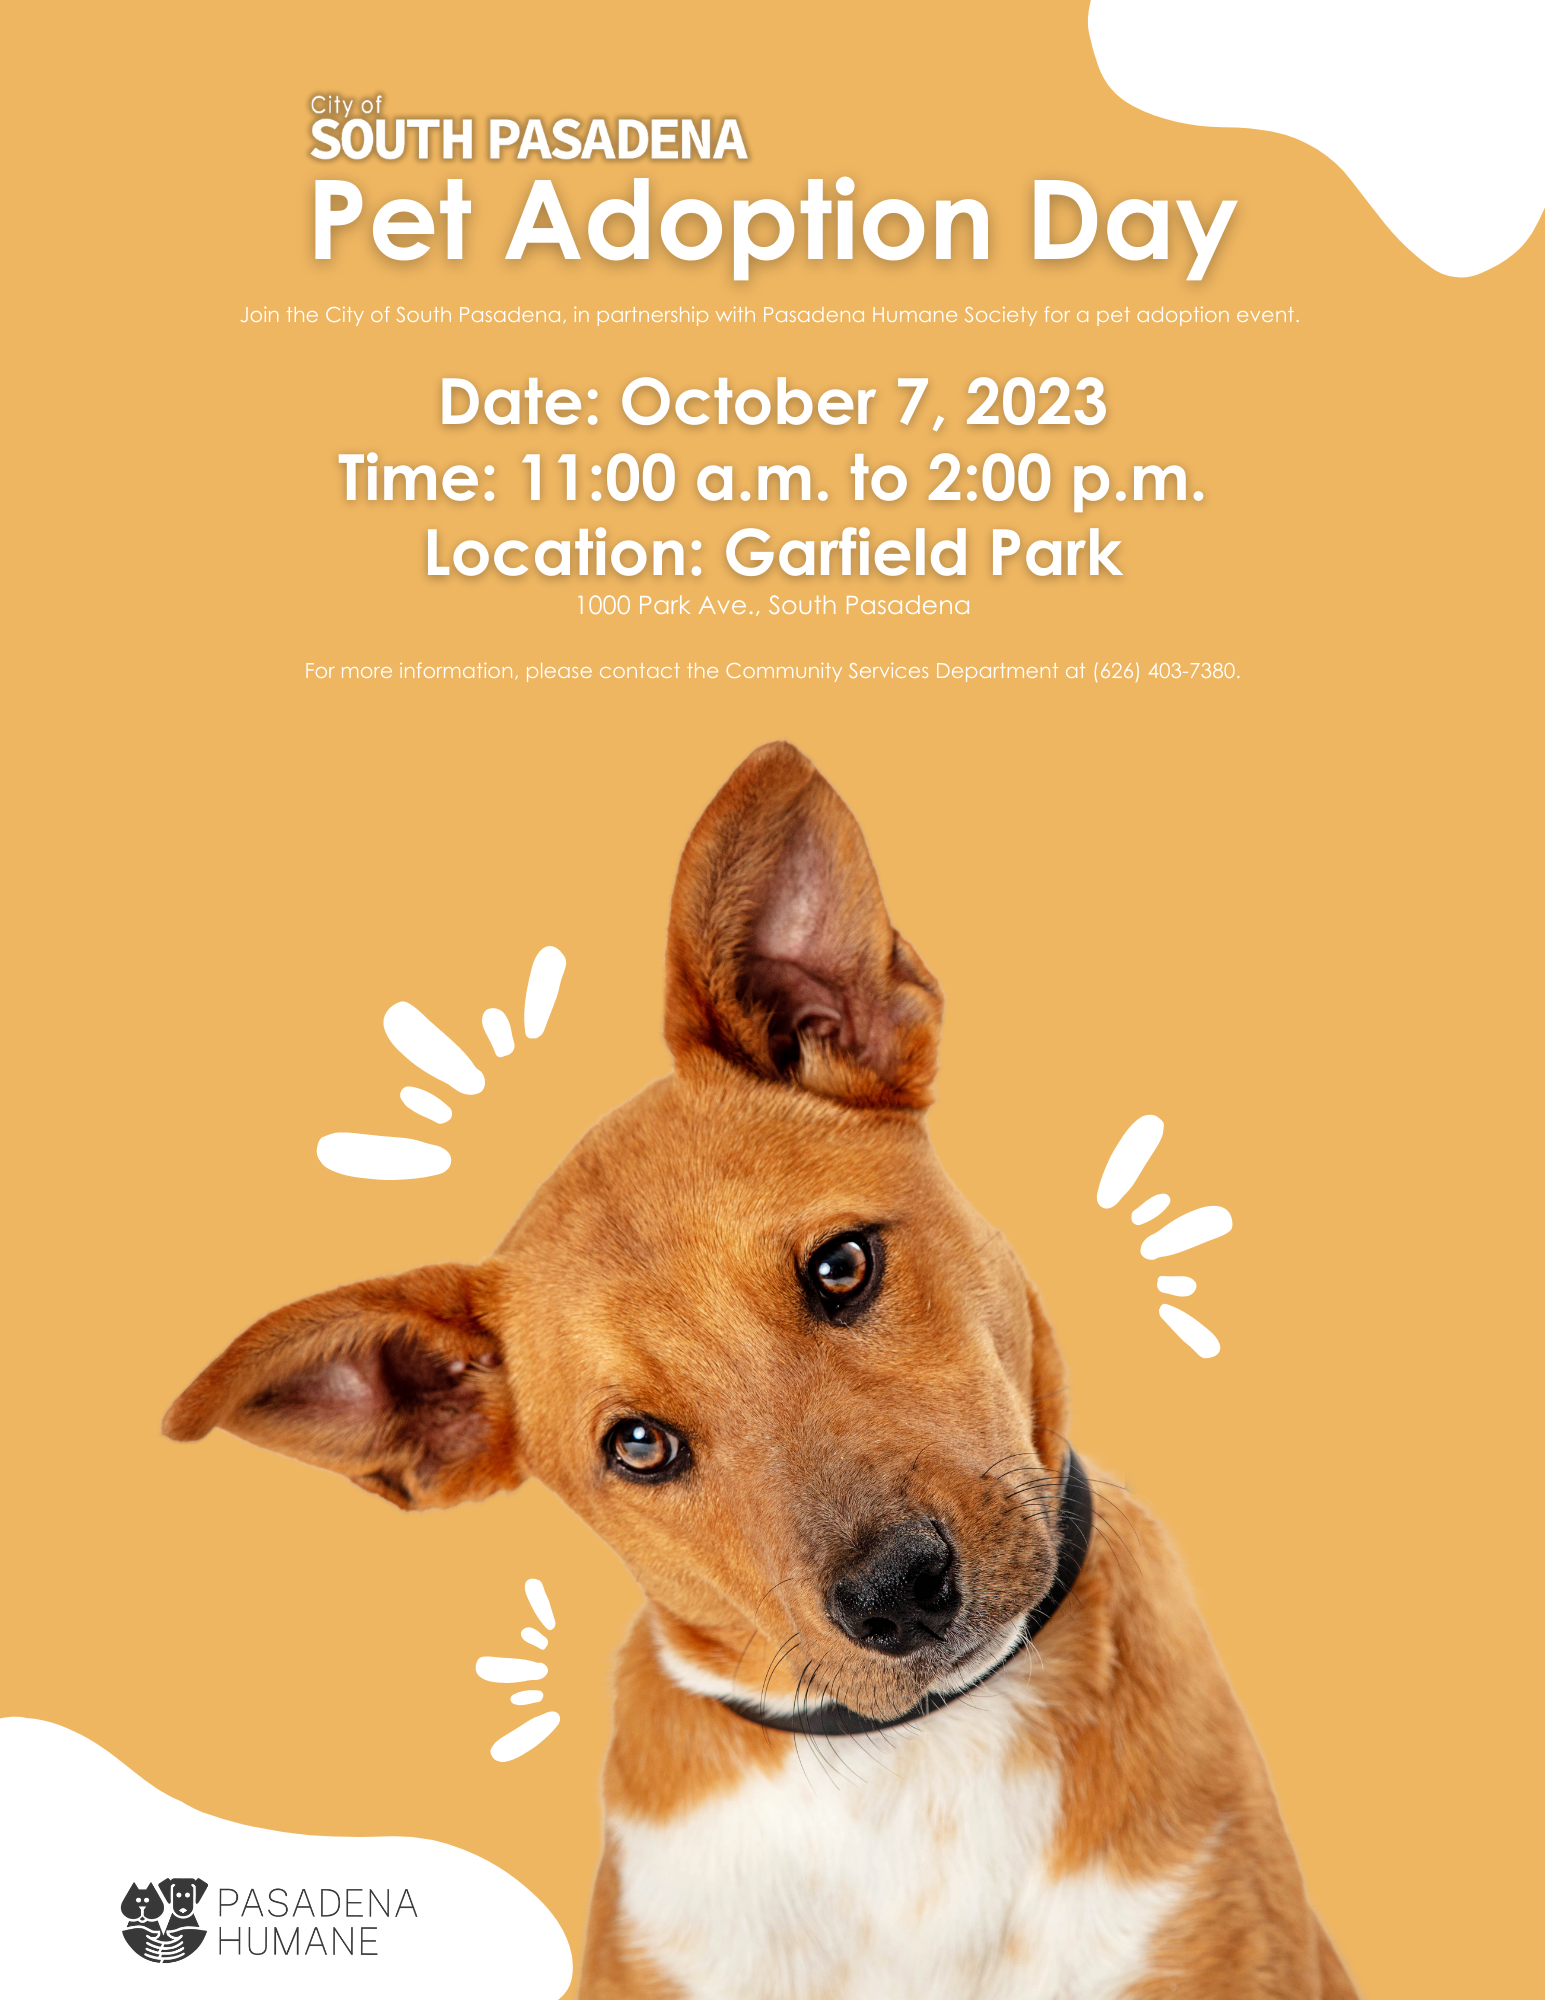 Pop-Up Adoption Event at Garfield Park